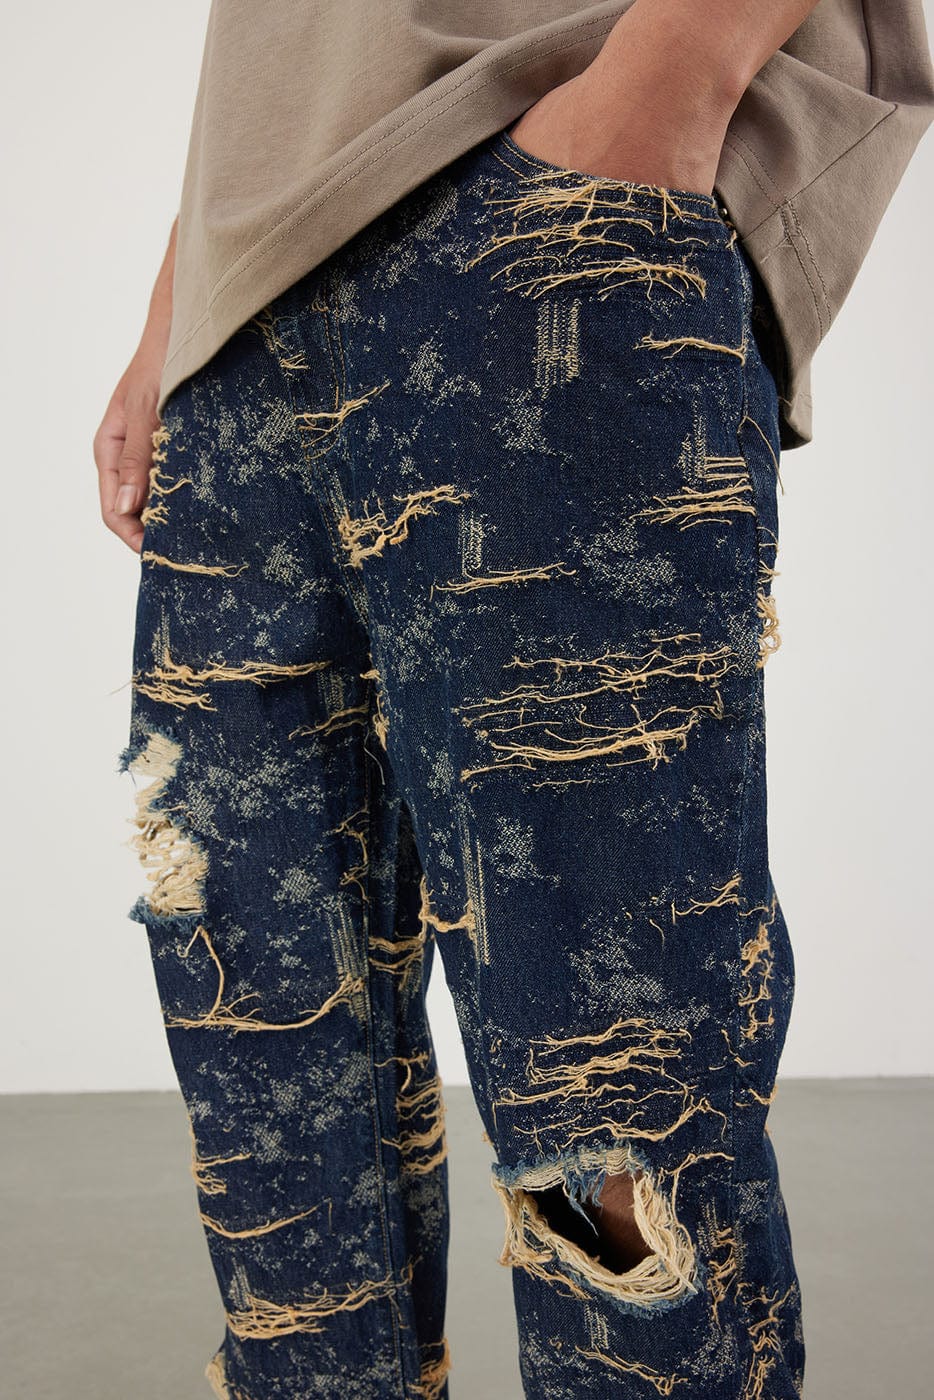 Brandy Melville Distressed Jeans | eBay